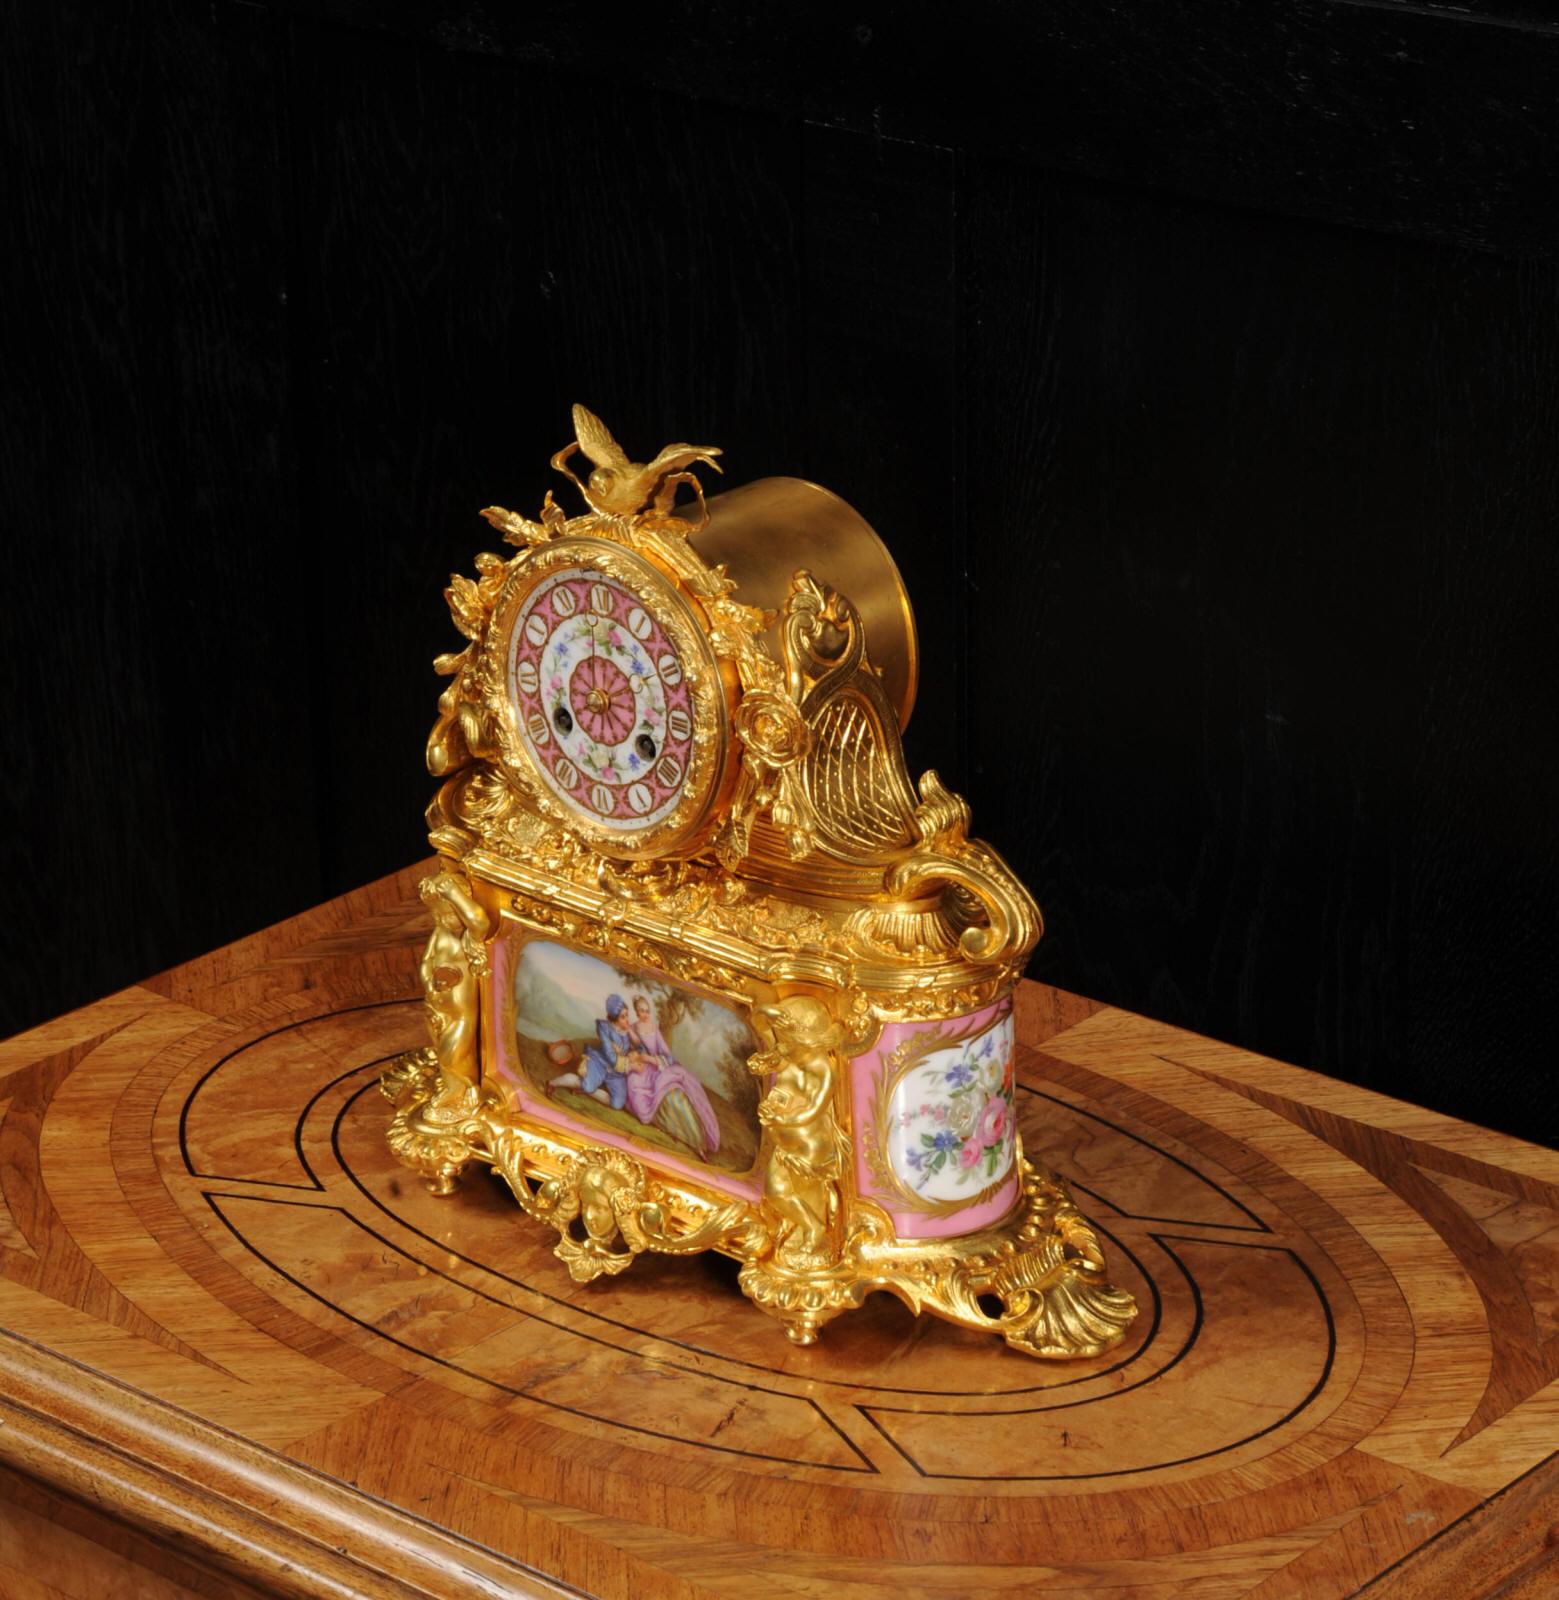 19th Century Sevres Porcelain and Ormolu Antique French Boudoir Clock